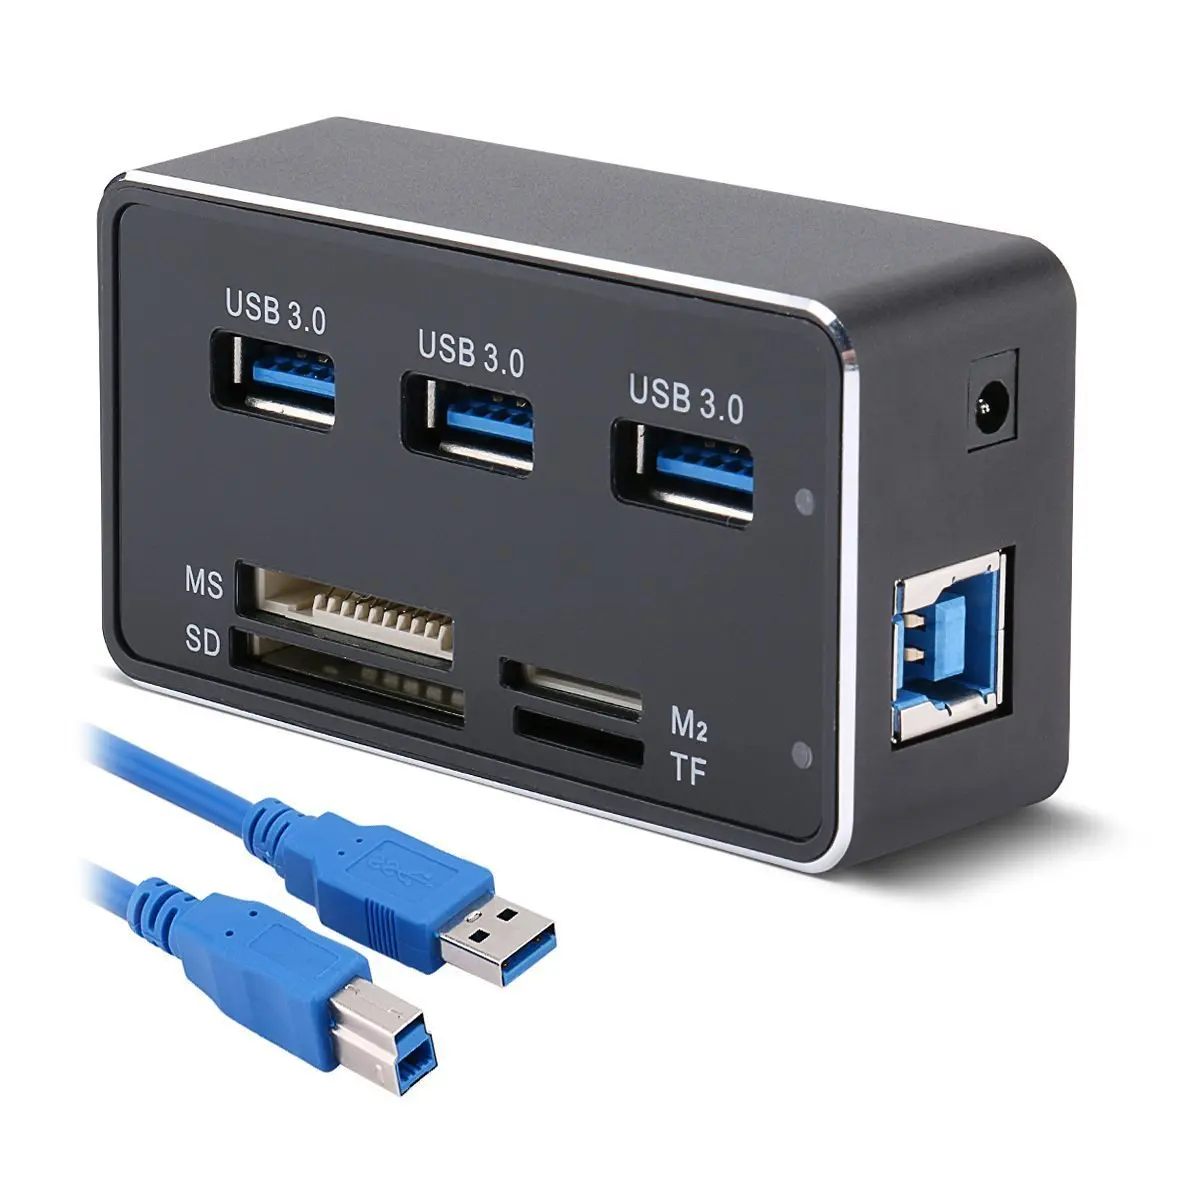 Usb 3.3. USB концентратор USB 3.0. USB-хаб USB3.0 концентратор разветвитель. USB хаб (концентратор) USB 3.0 Combo. Хаб УСБ 3.0.